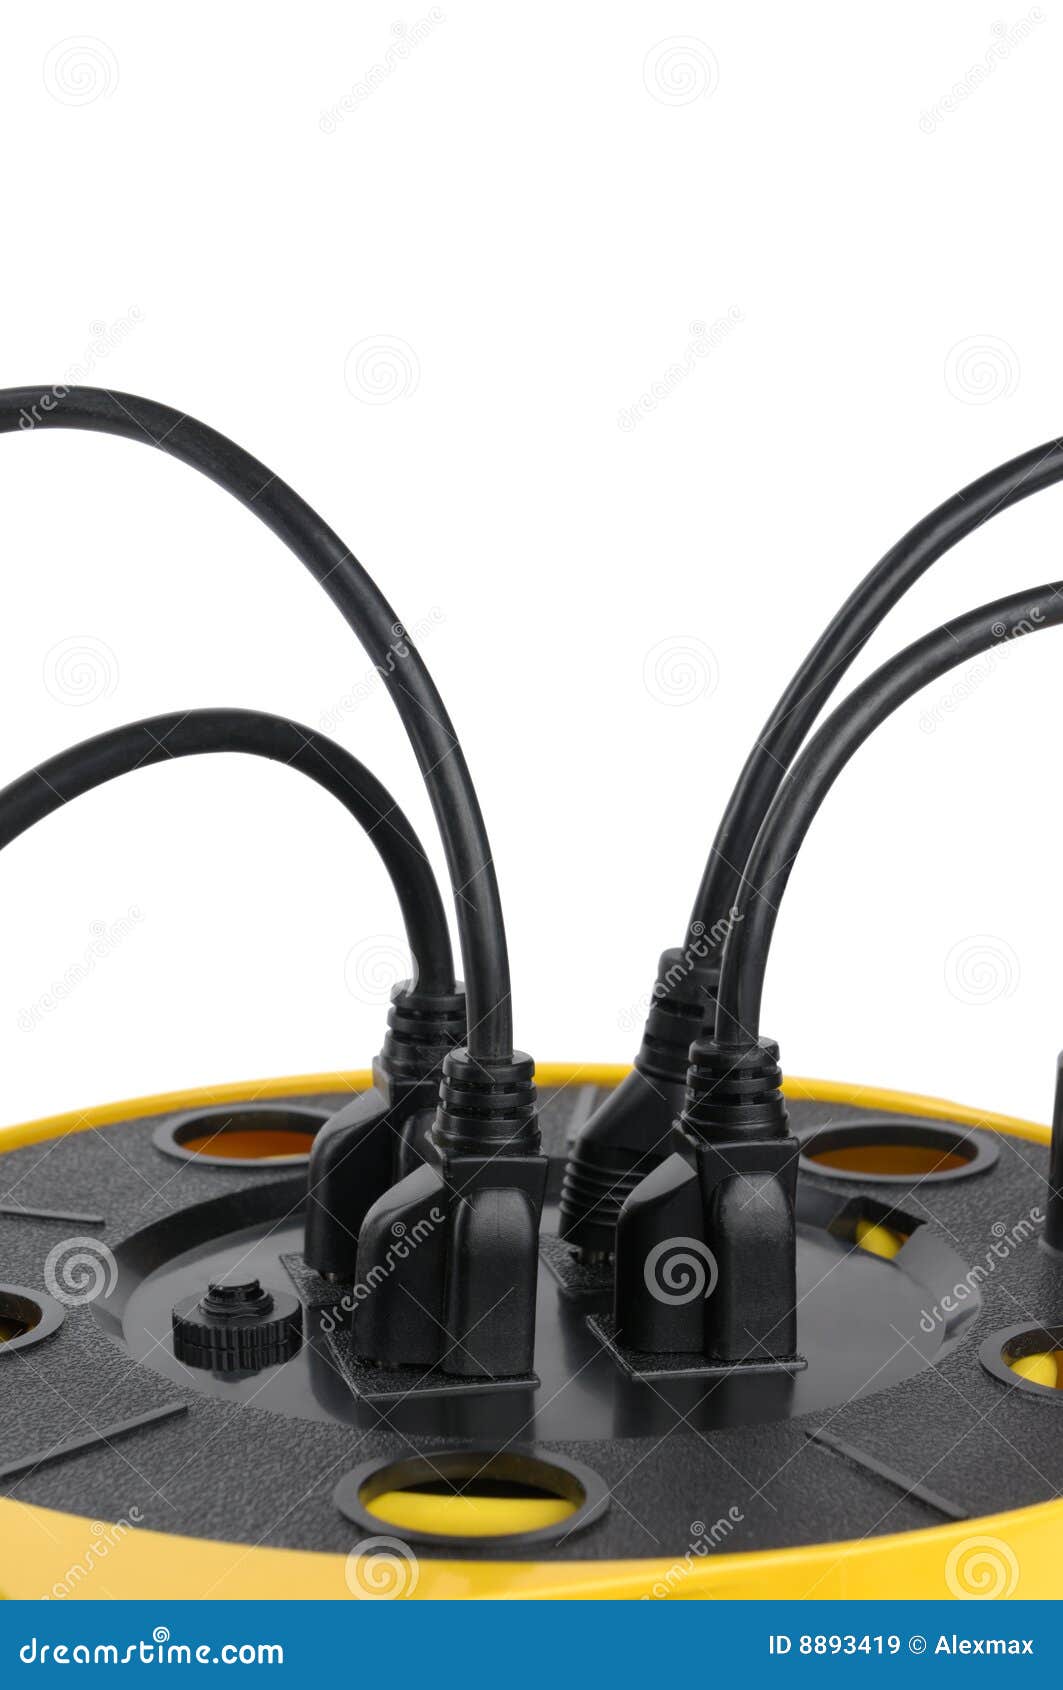 power cords